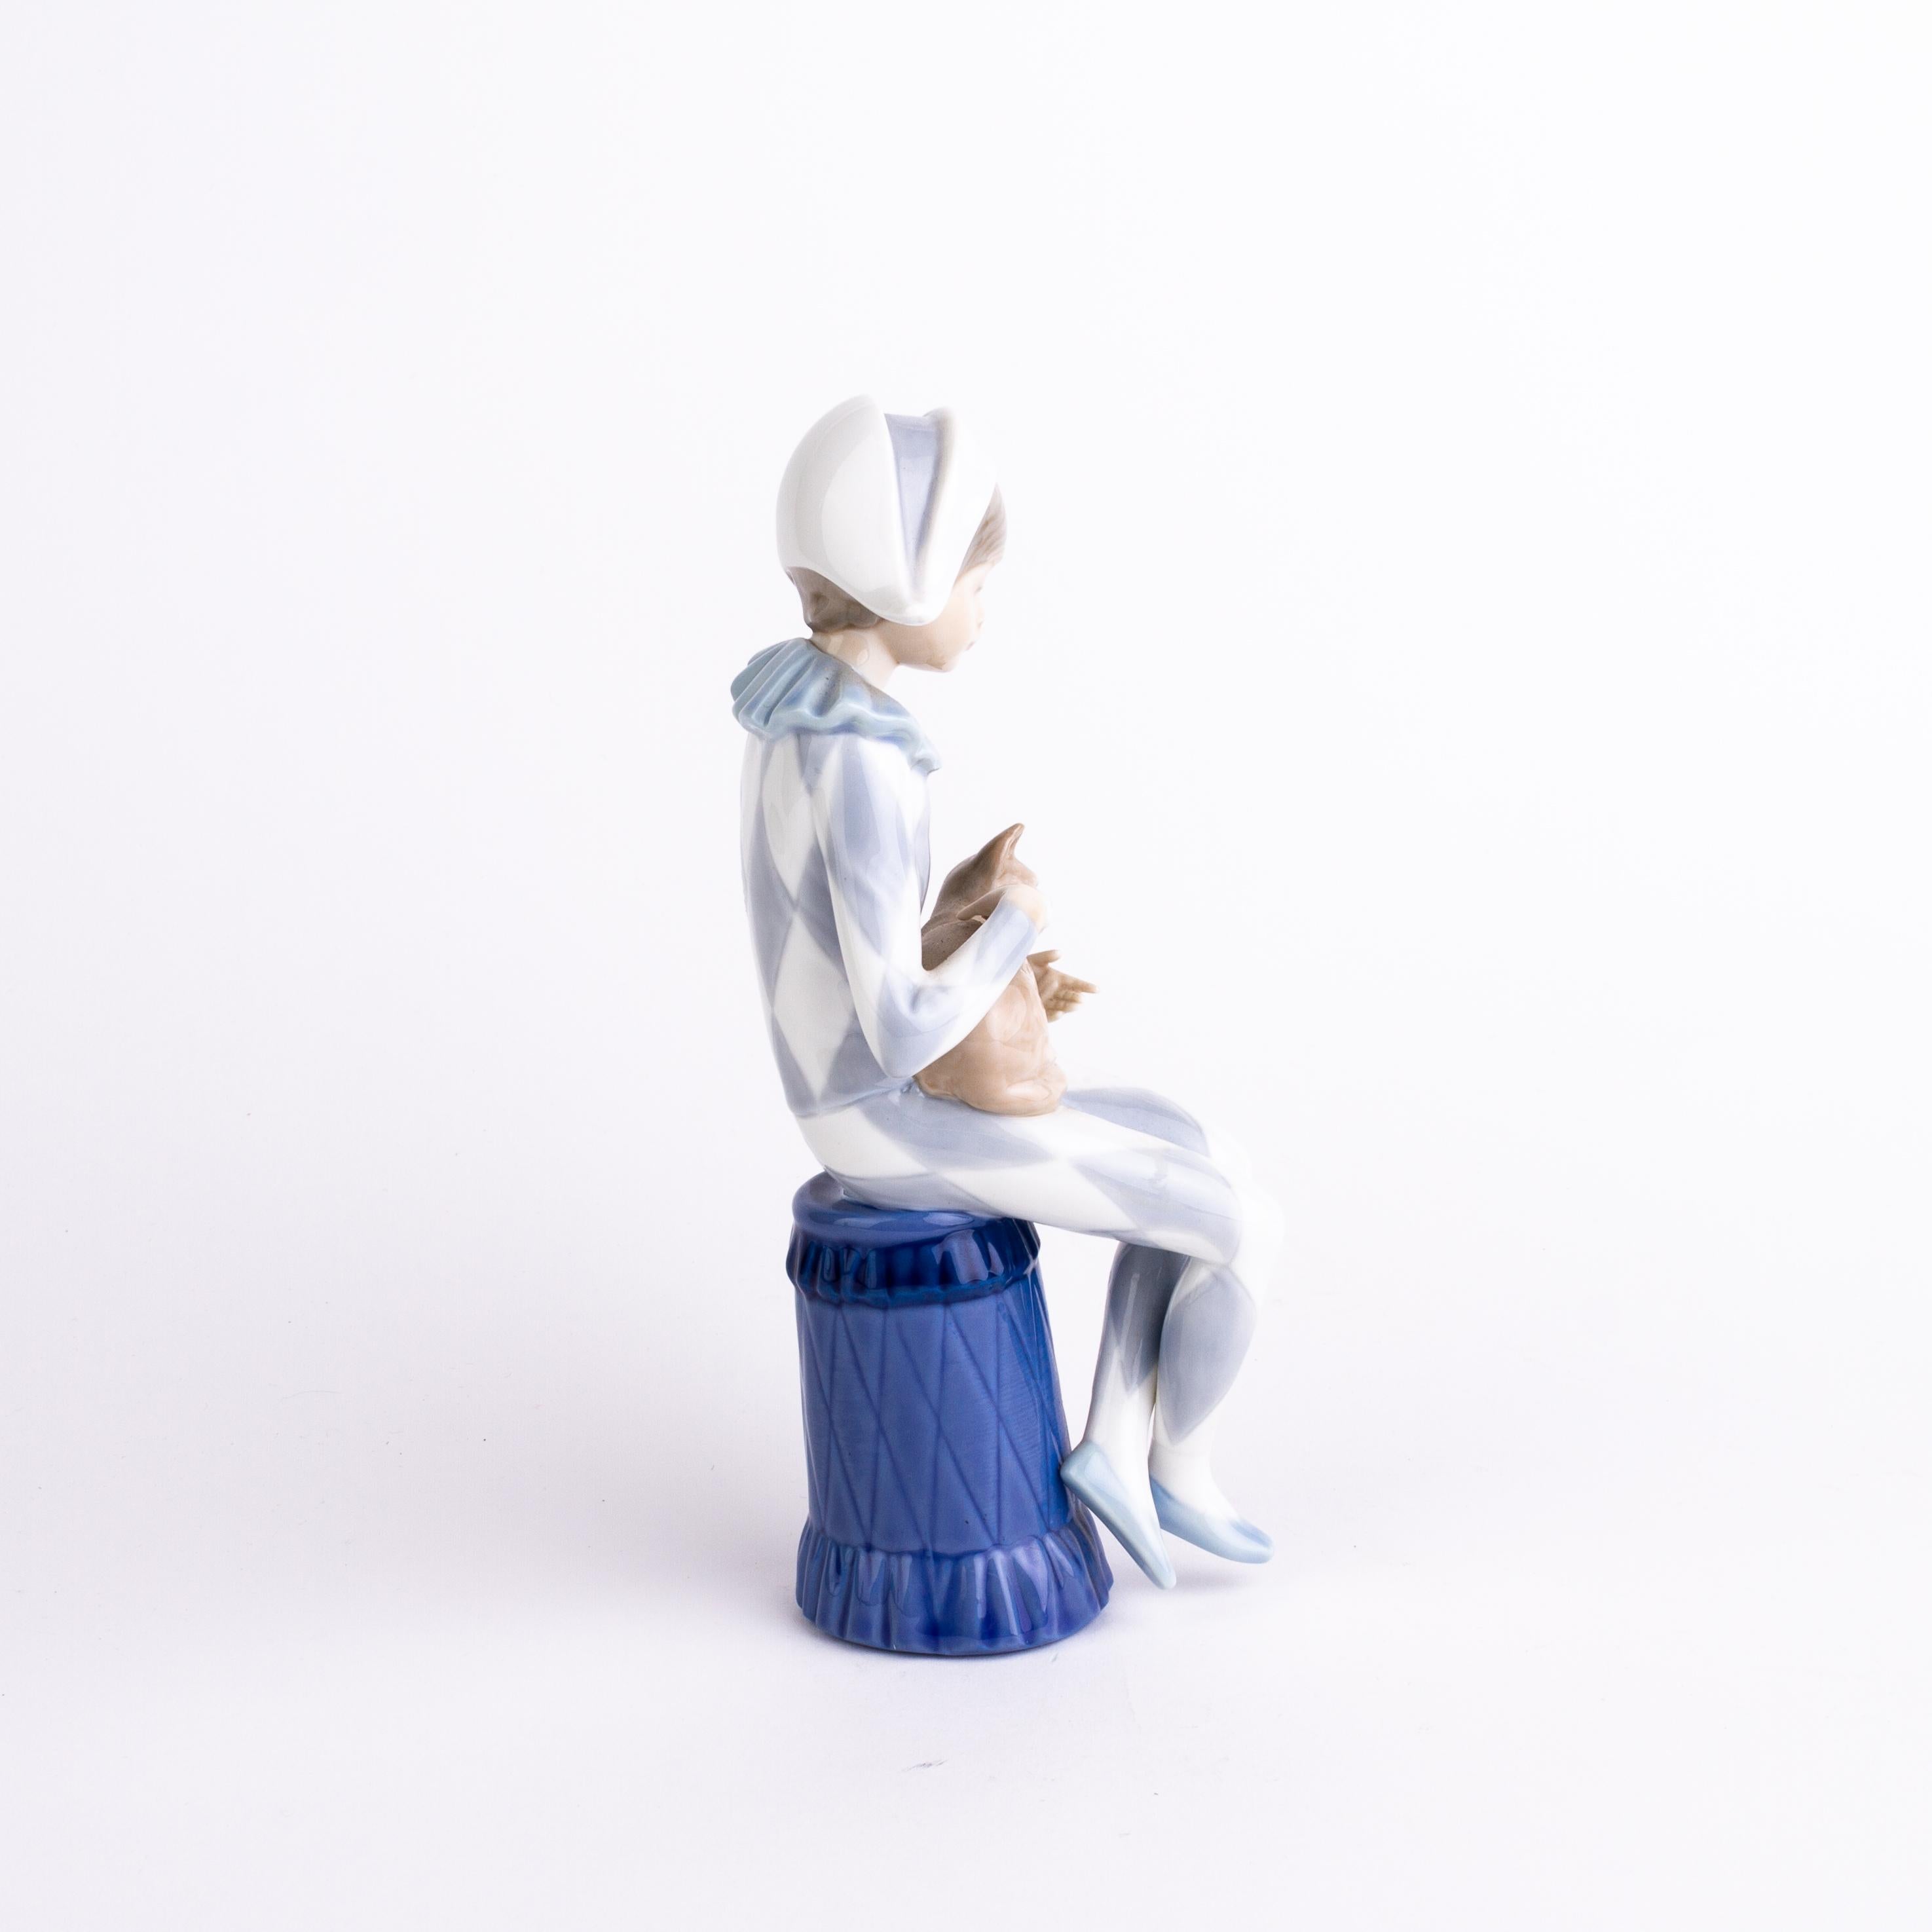 Spanish Fine Porcelain Nao Lladro Harlequin Sculpture Figure 
Good condition
Free international shipping.